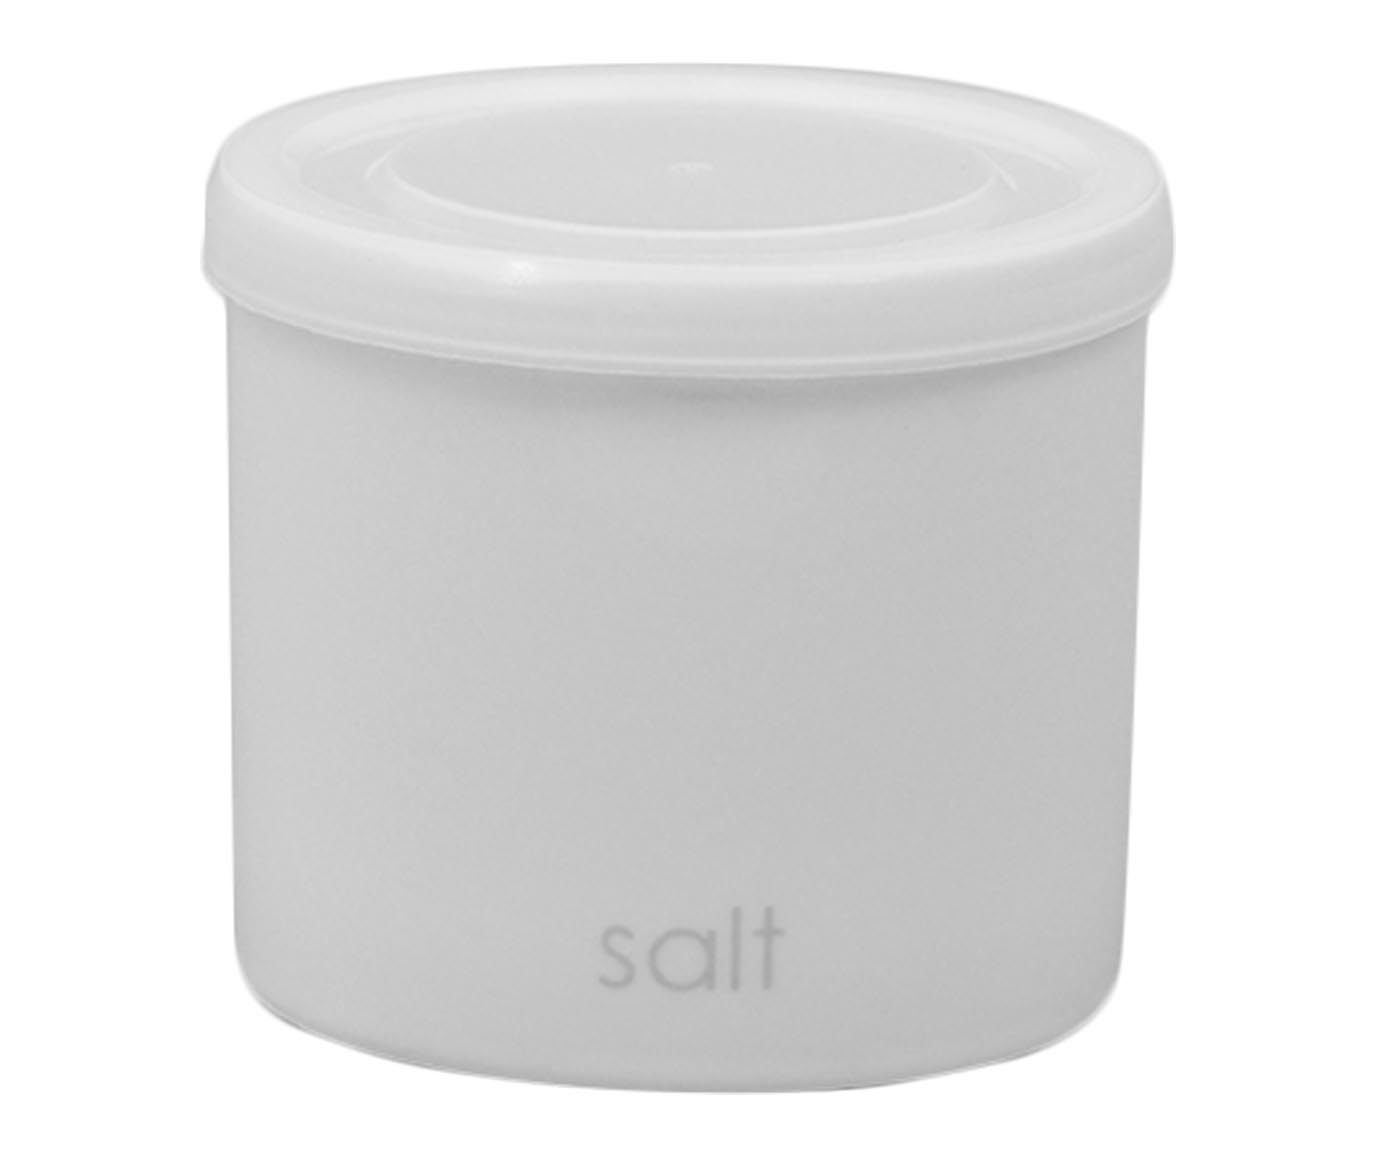 Pote para mantimentos salt mineral | Westwing.com.br